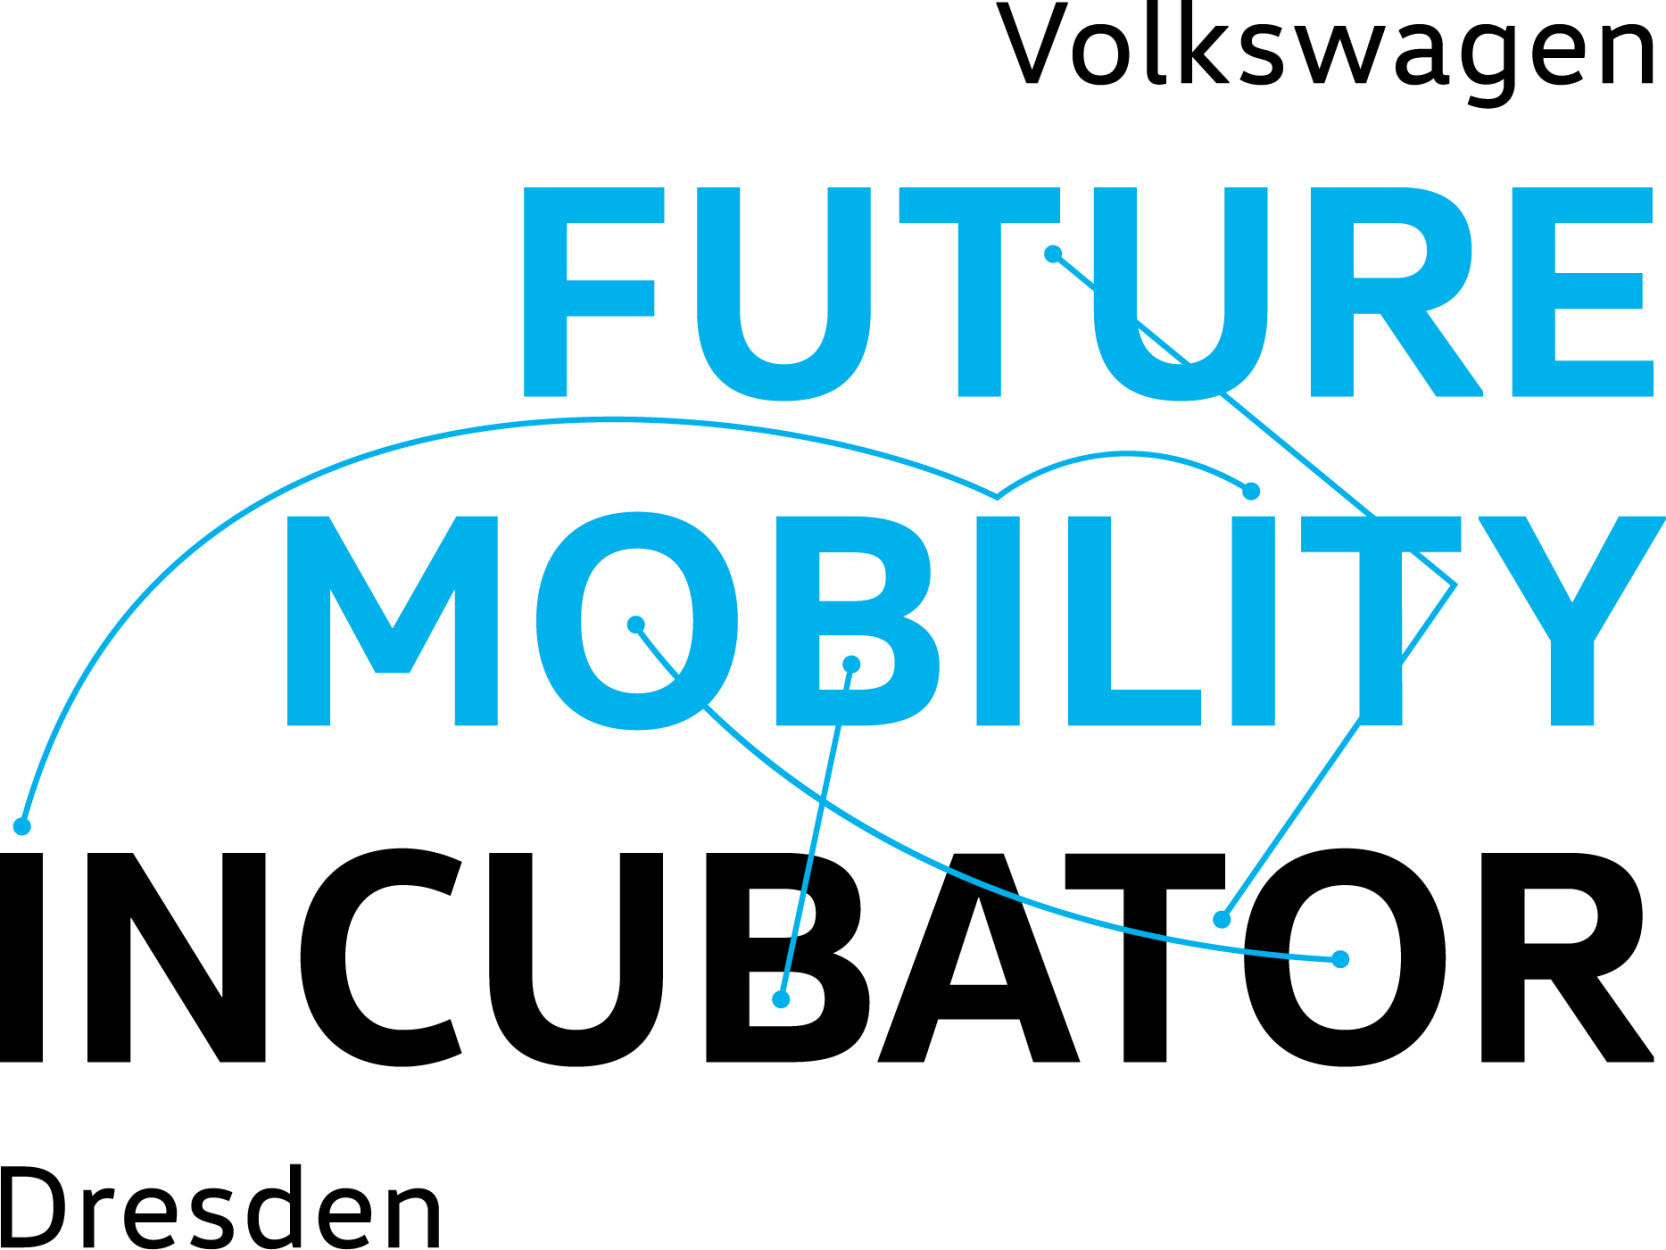 VW future mobility incubator mz rgb